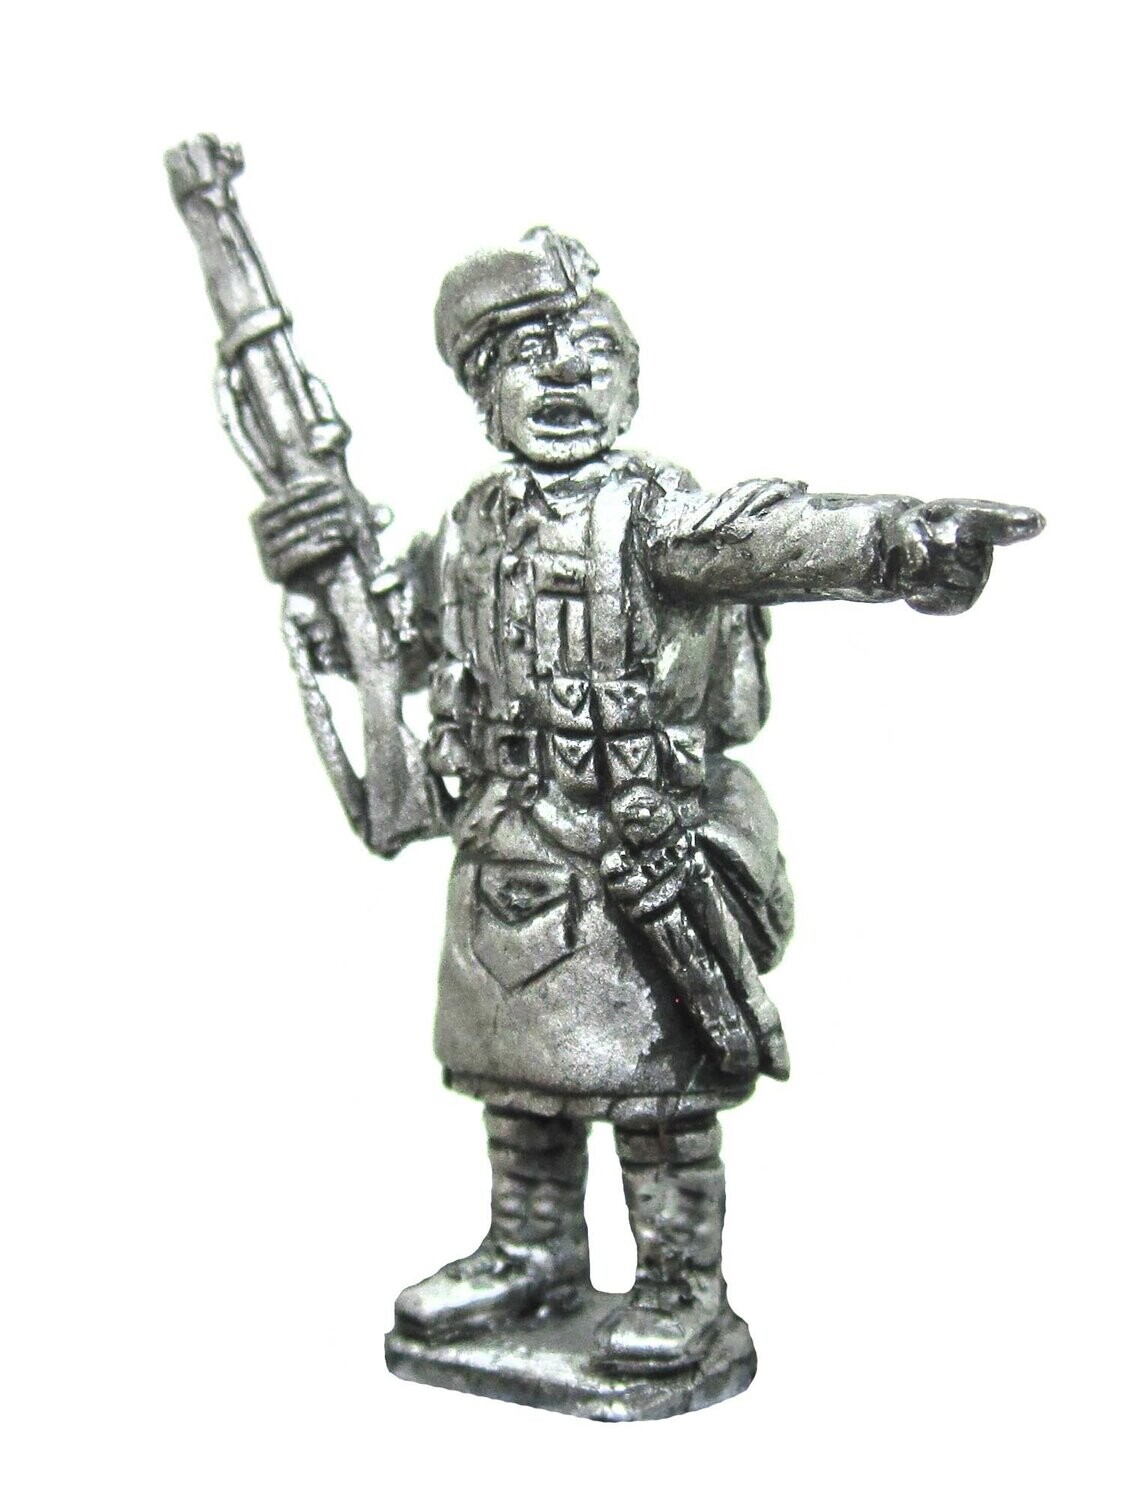 28mm British WW1 London Scottish sergeant pointing